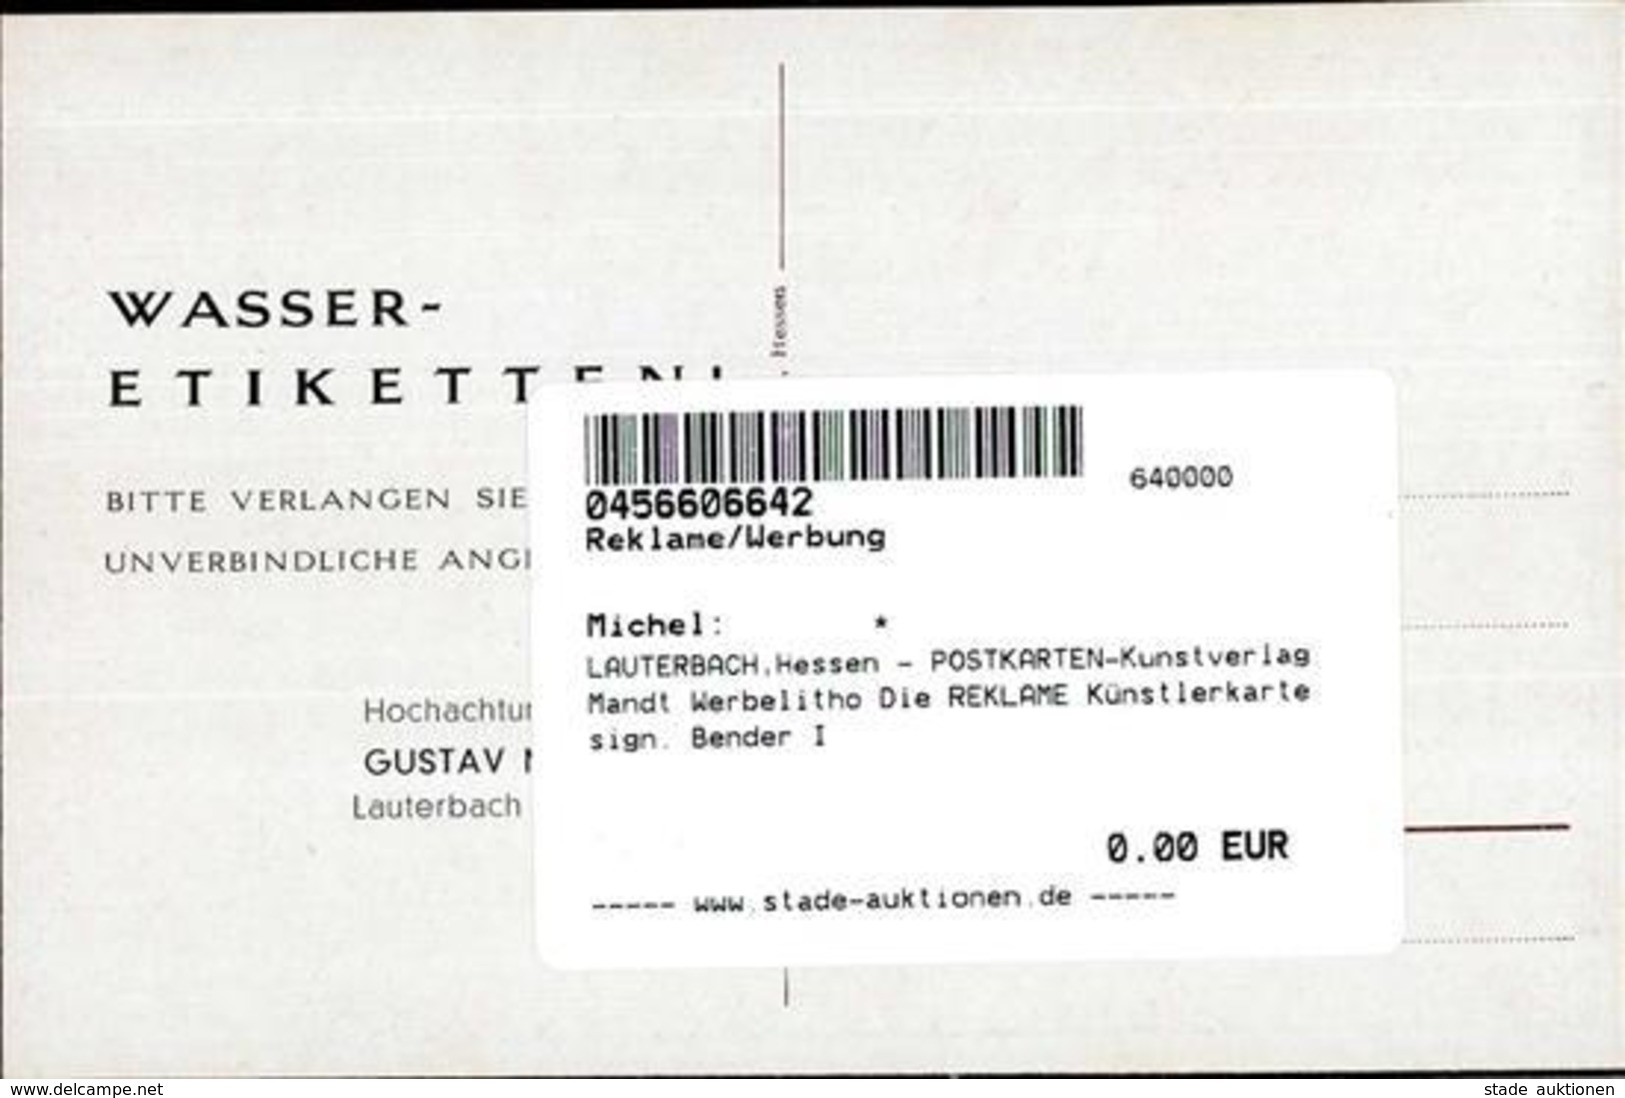 LAUTERBACH,Hessen - POSTKARTEN-Kunstverlag Mandt Werbelitho Die REKLAME Künstlerkarte Sign. Bender I - Advertising